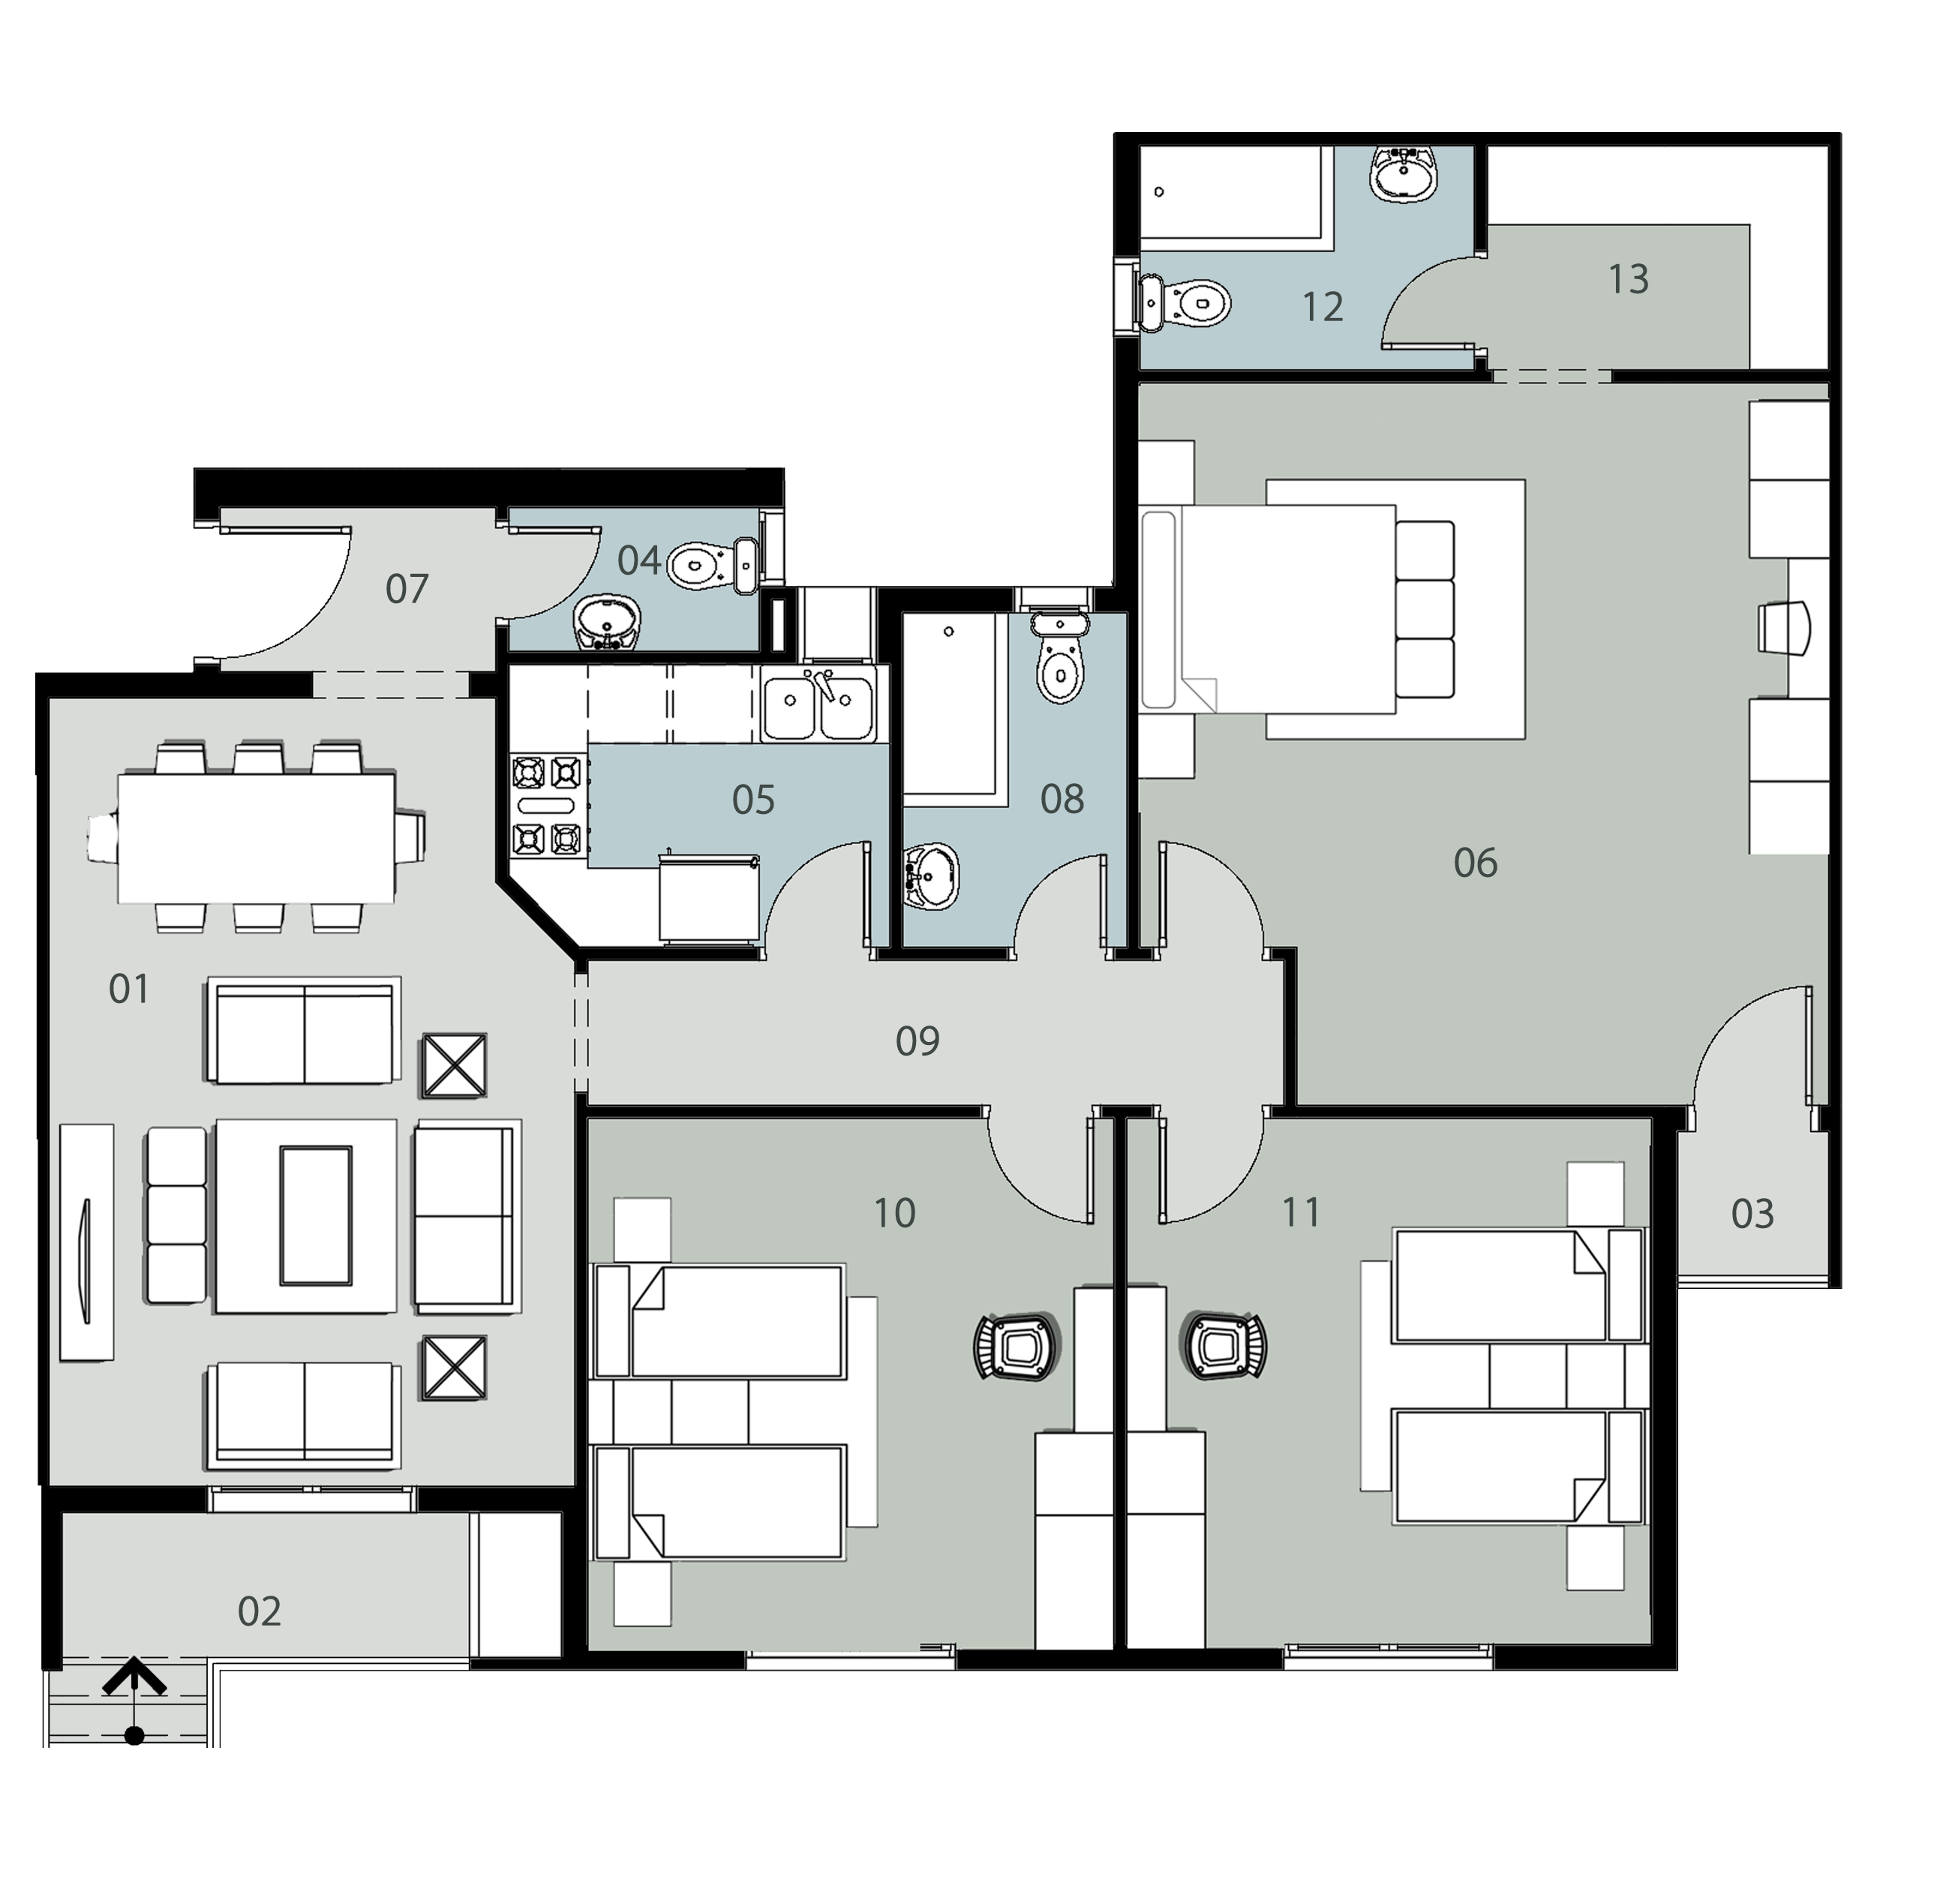 (5a - 03) الطابق الارضى